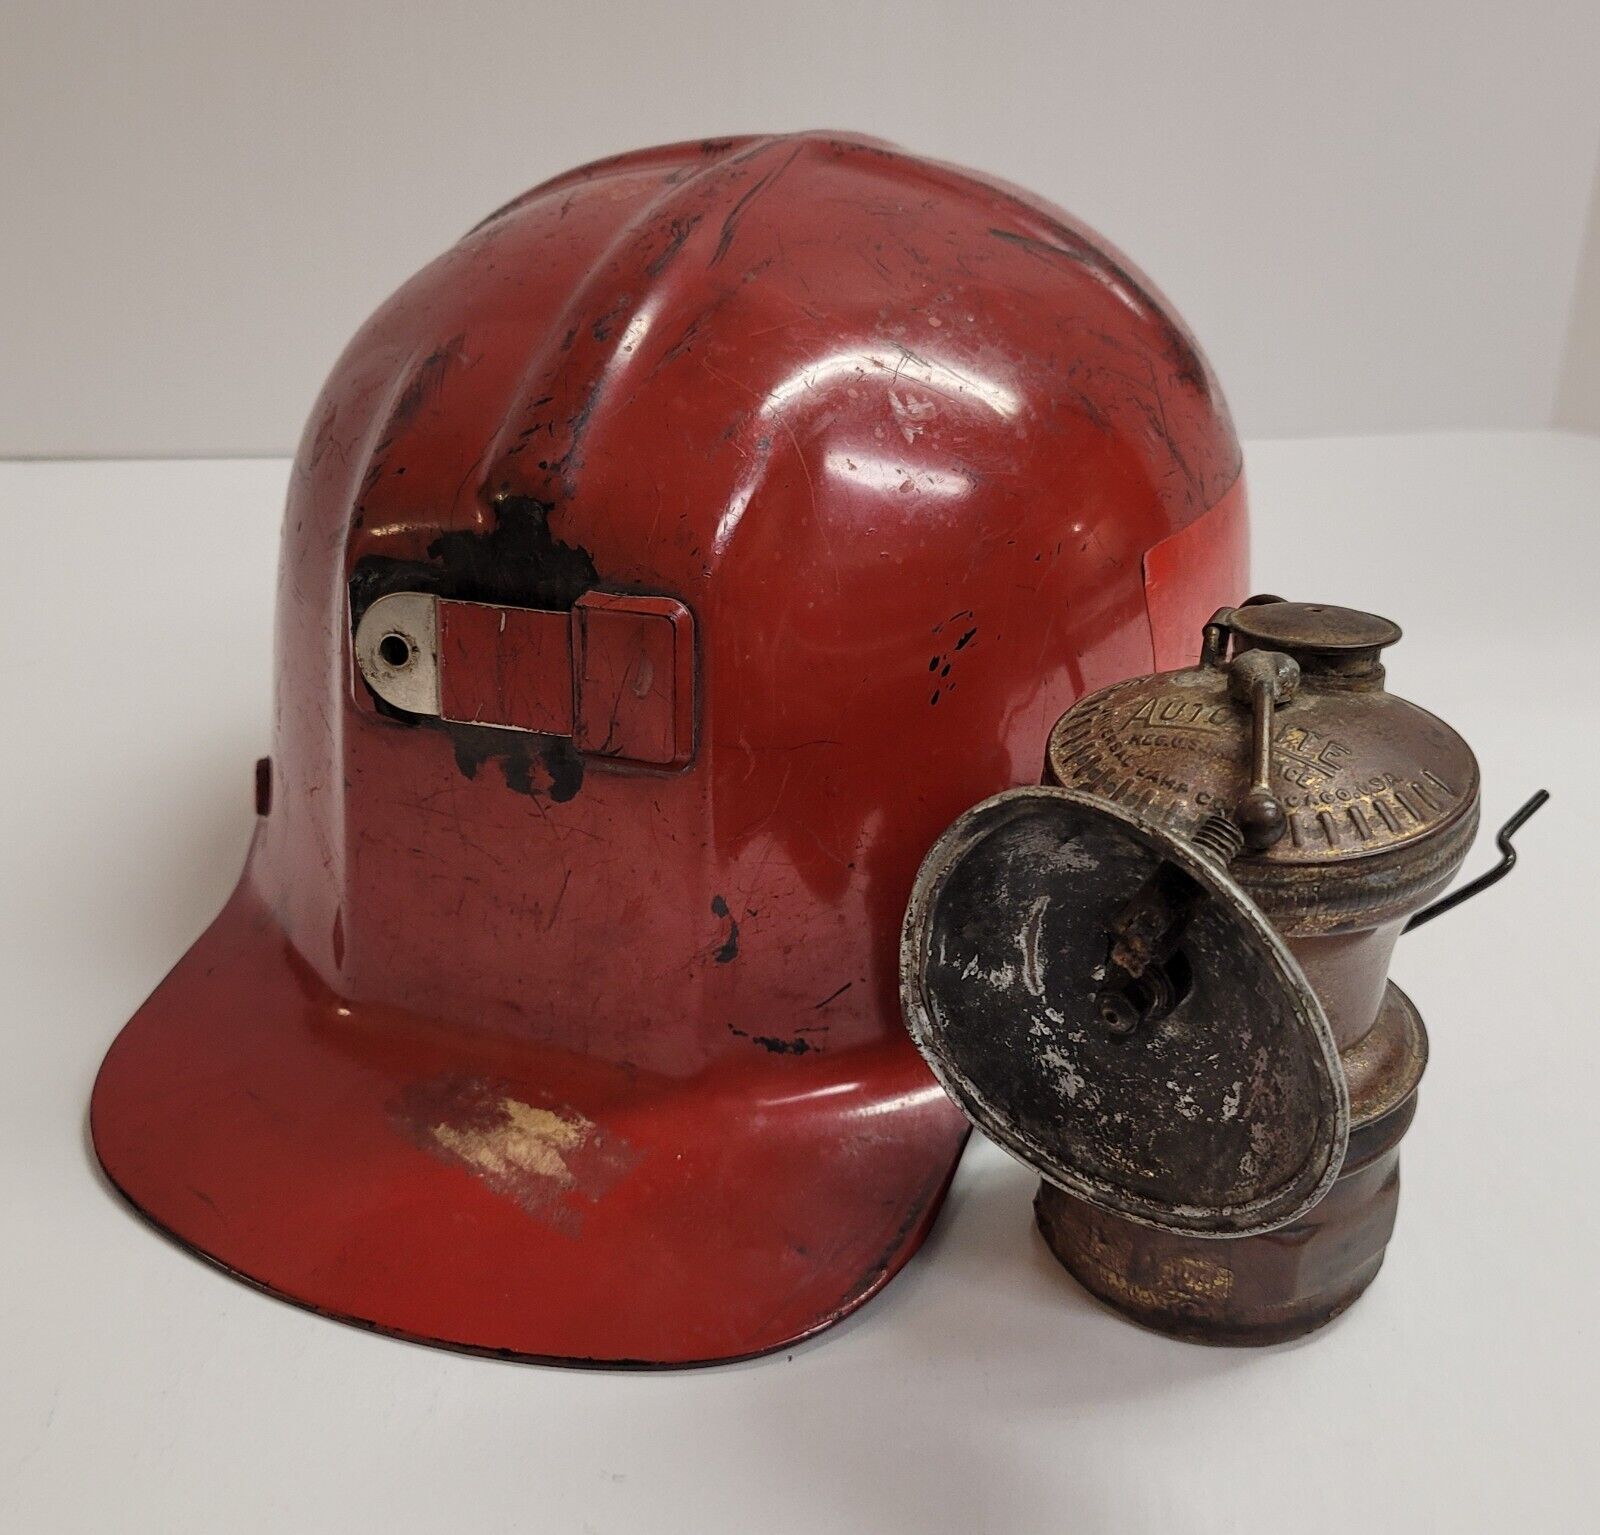 MSA Comfo-Cap Coal Miners Helmet Model ANSI Z89.1-1969 Class A Red Liner & Lamp